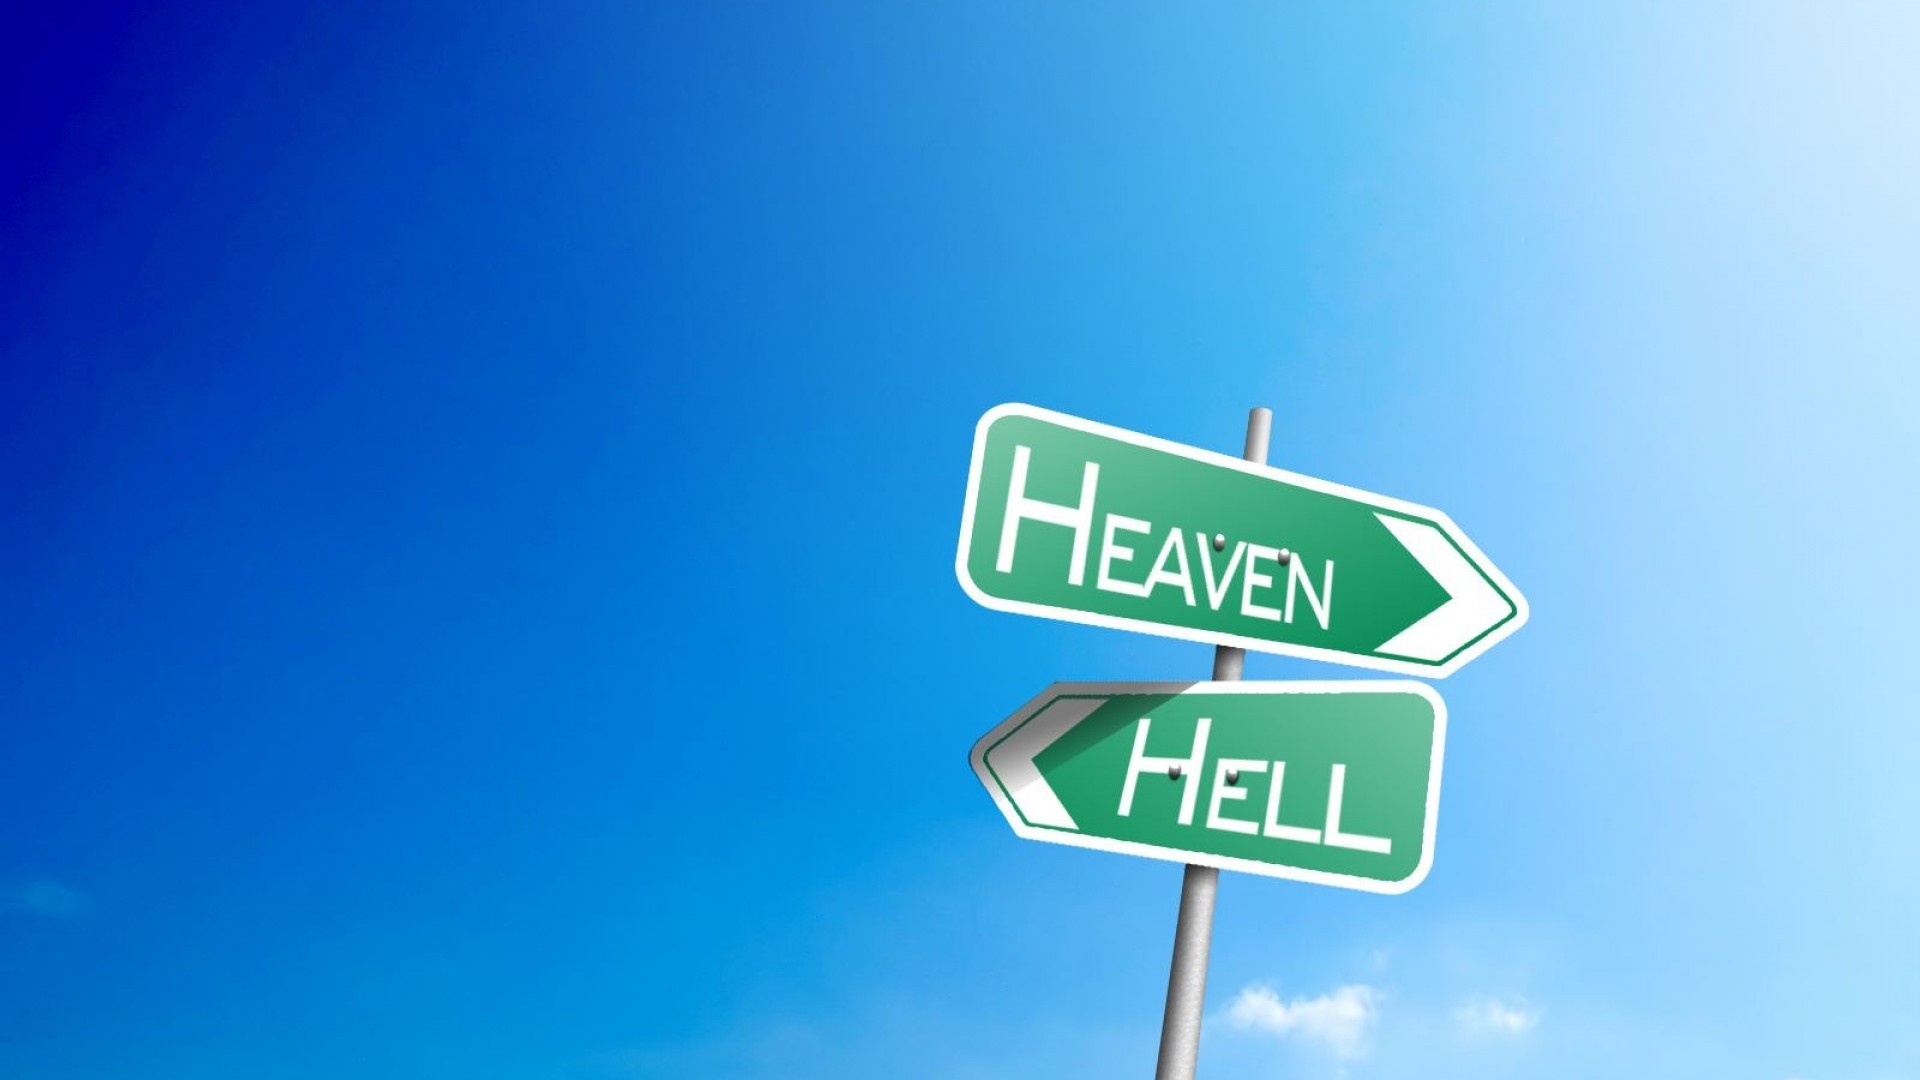 1920x1080 Hell Heaven inspirational sign road sign wallpaper